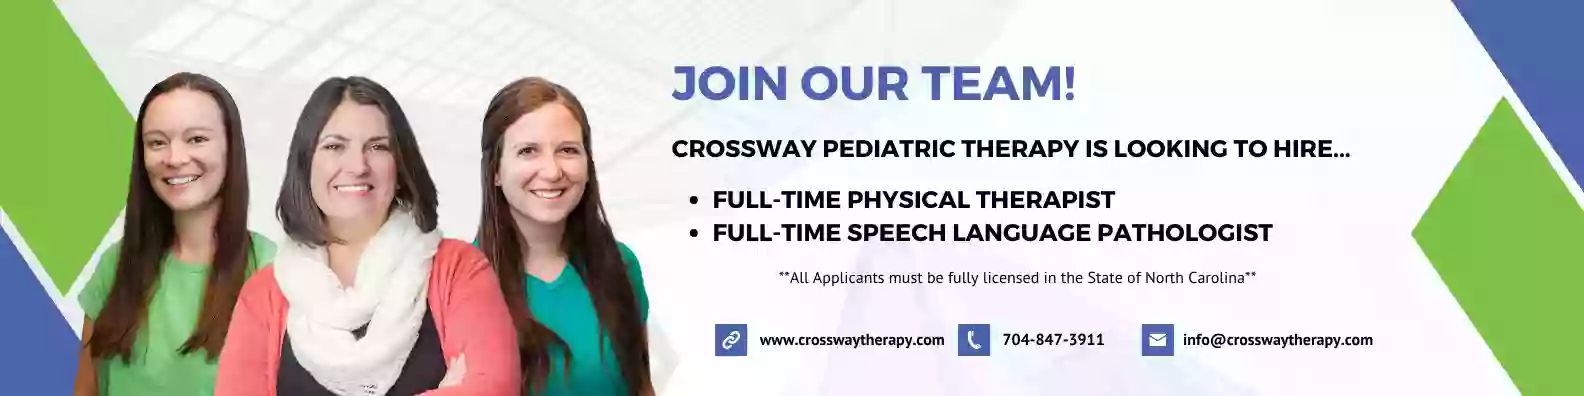 Crossway Pediatric Therapy